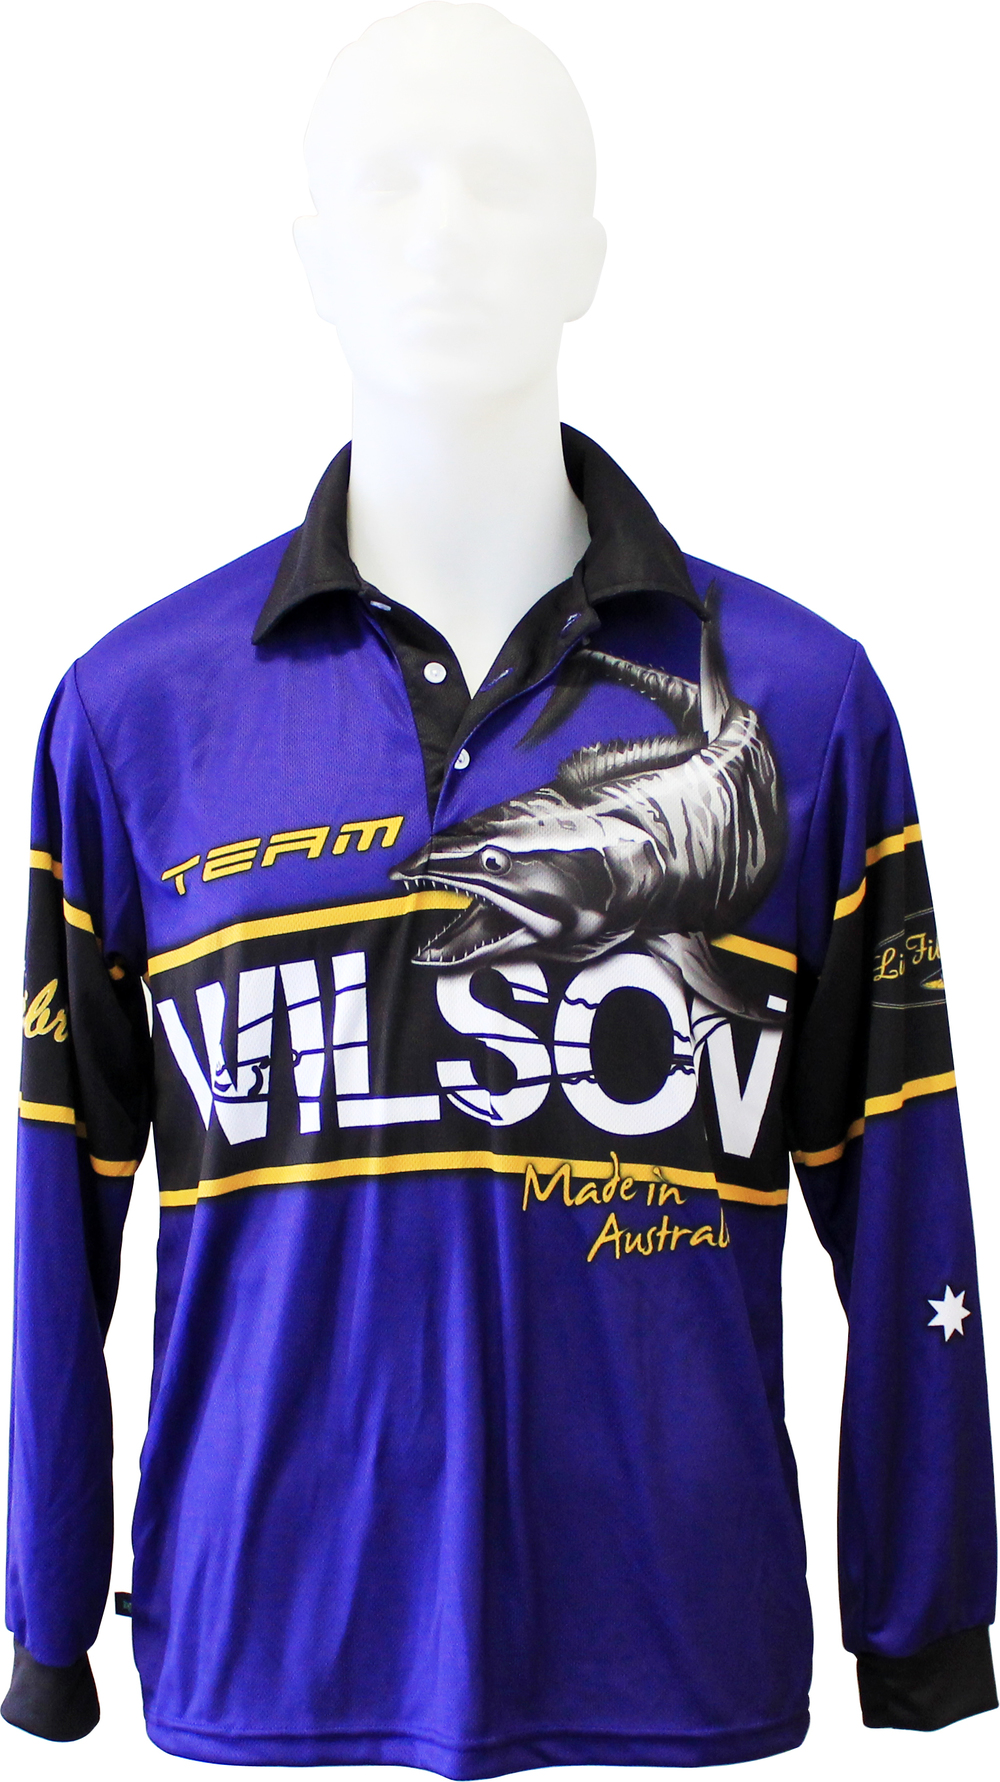 Wilson Team Venom kids fishing shirts - Fishing World Australia